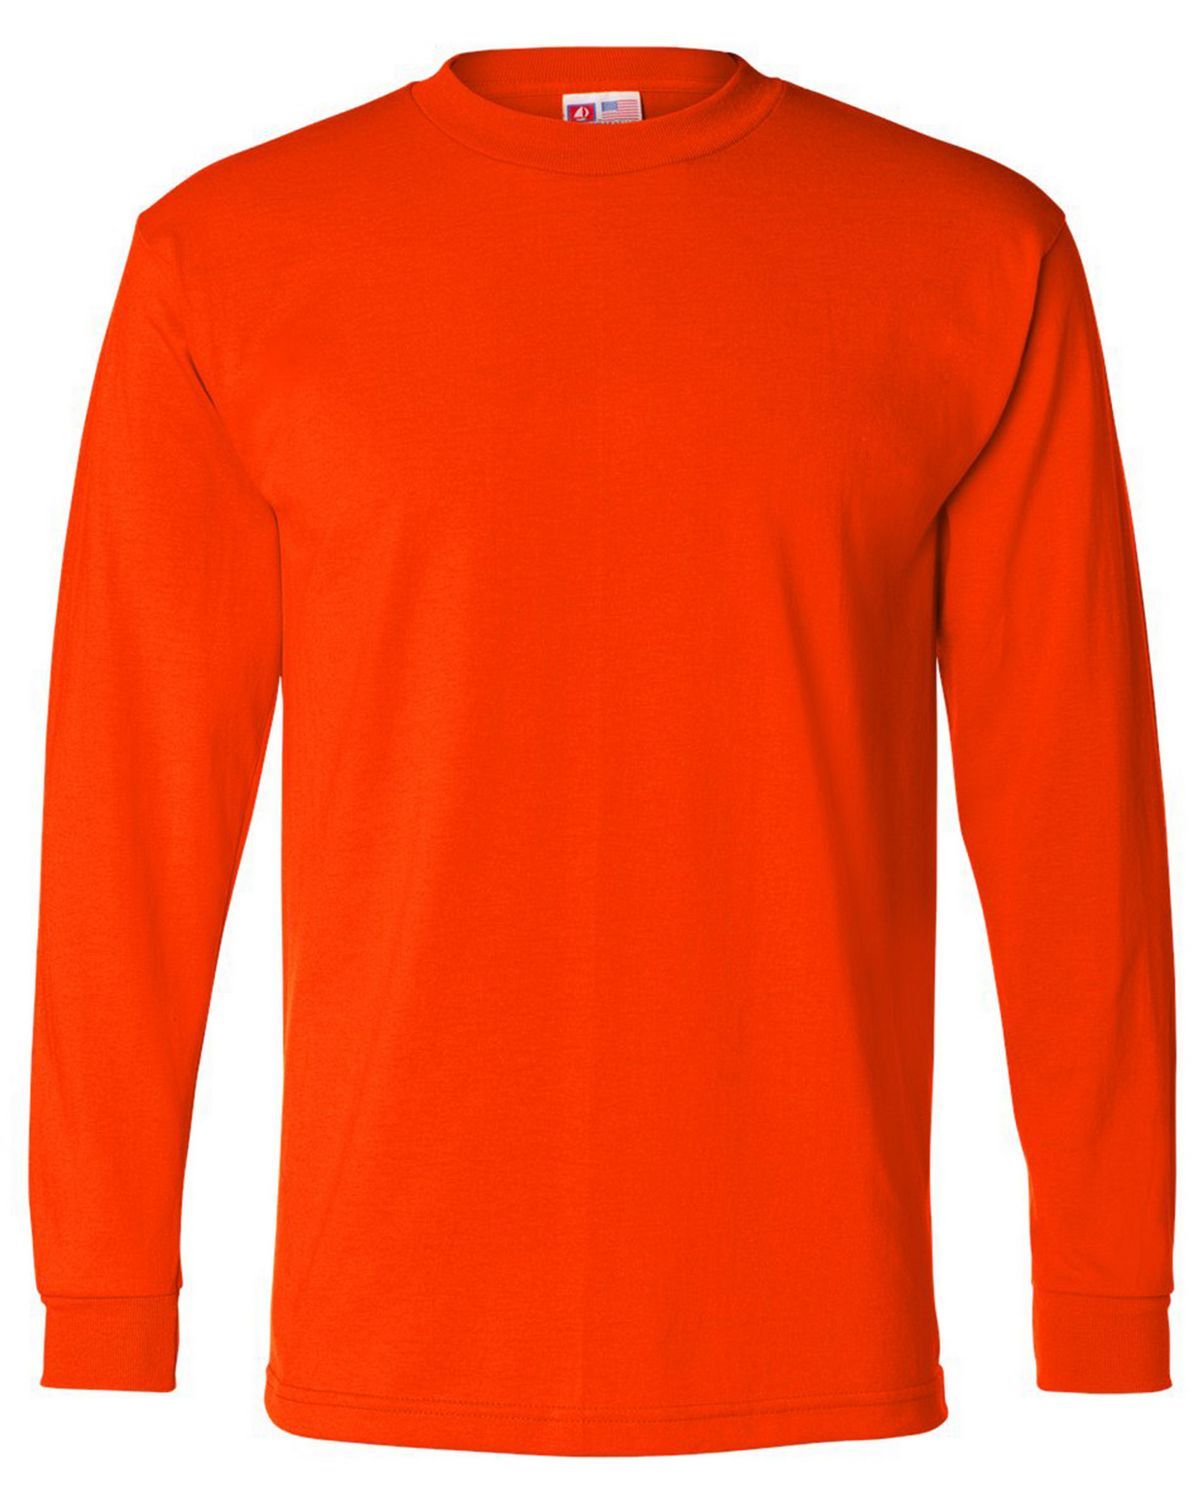 Bayside 1715 USA-Made 50/50 Long Sleeve T-Shirt - Free Shipping Available